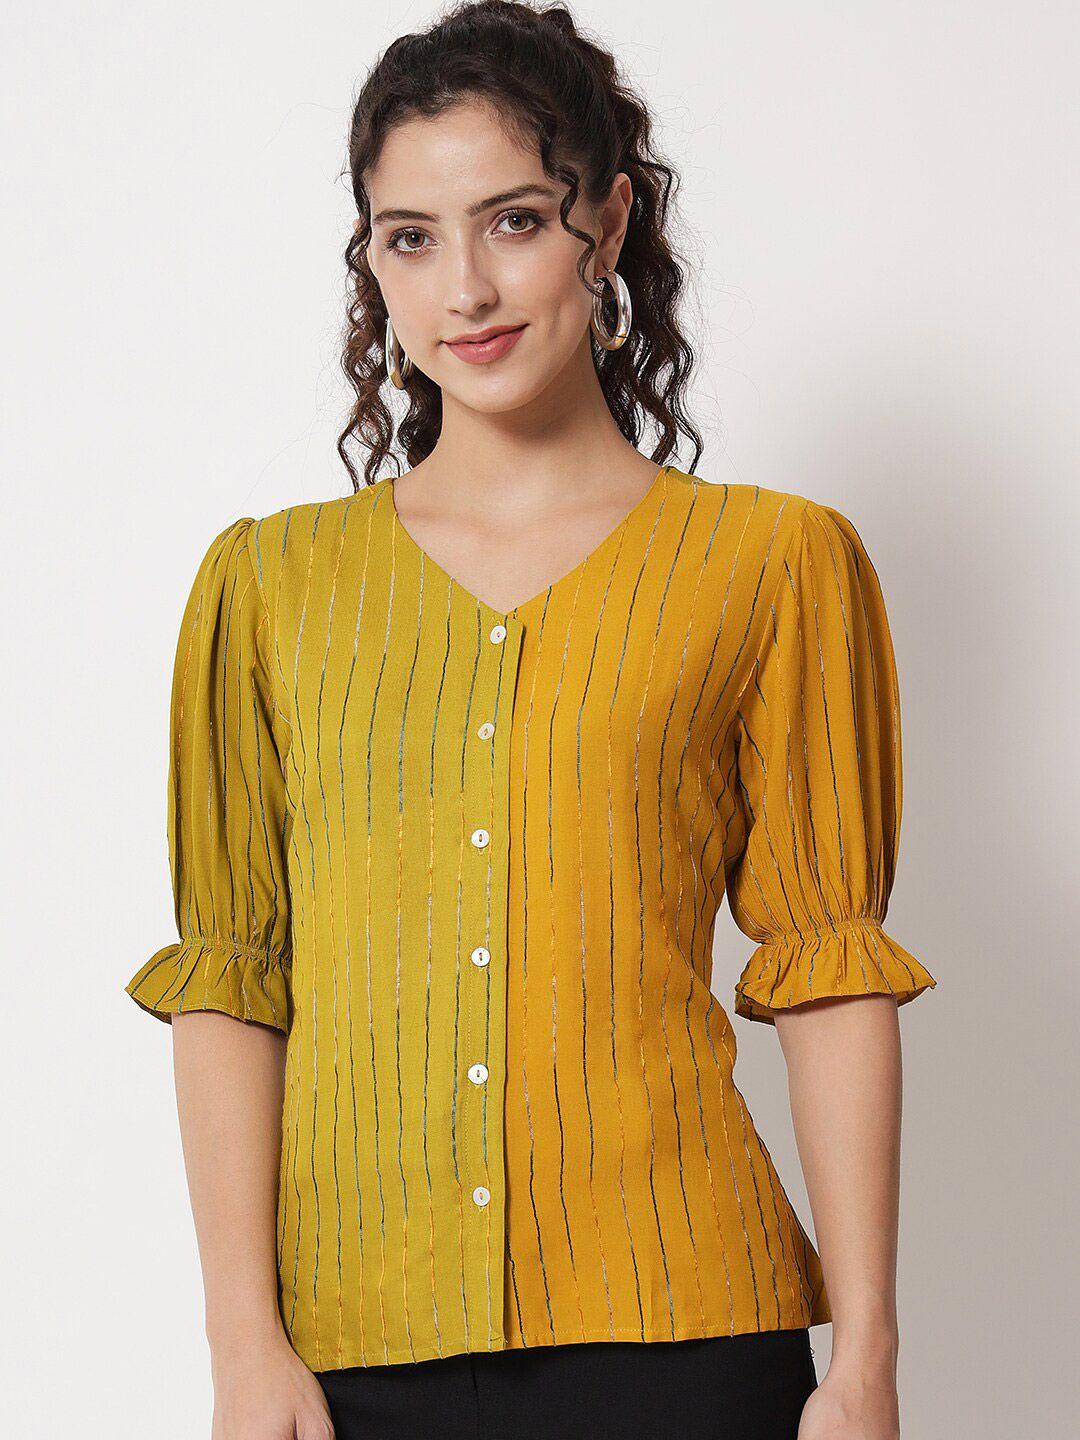 shopping queen women green & mustard yellow striped shirt style top